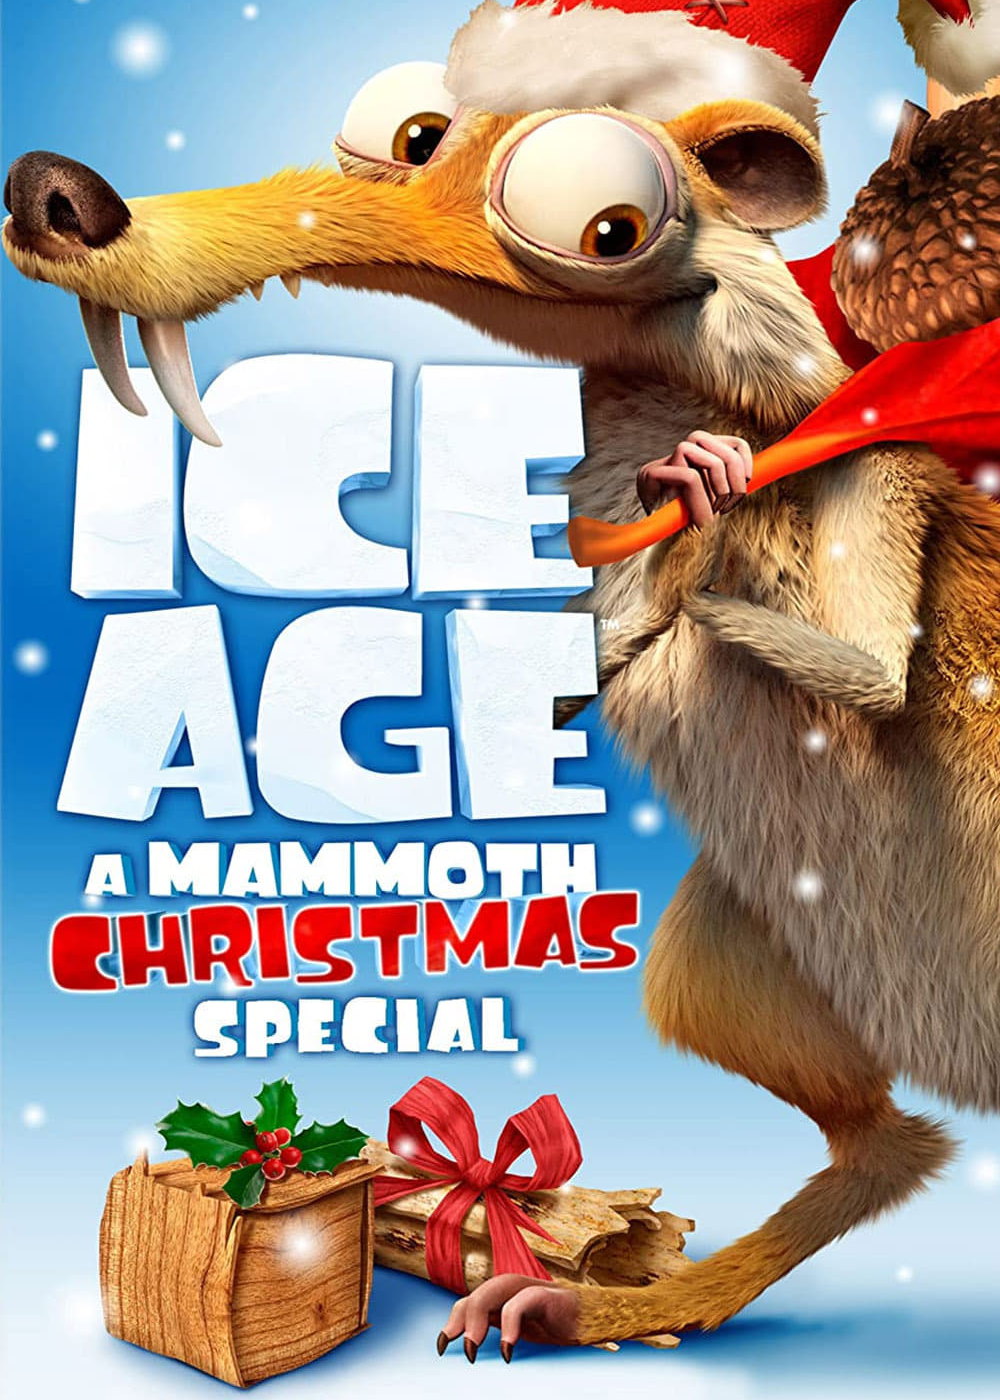 Ice Age: A Mammoth Christmas (Ice Age: A Mammoth Christmas) [2011]